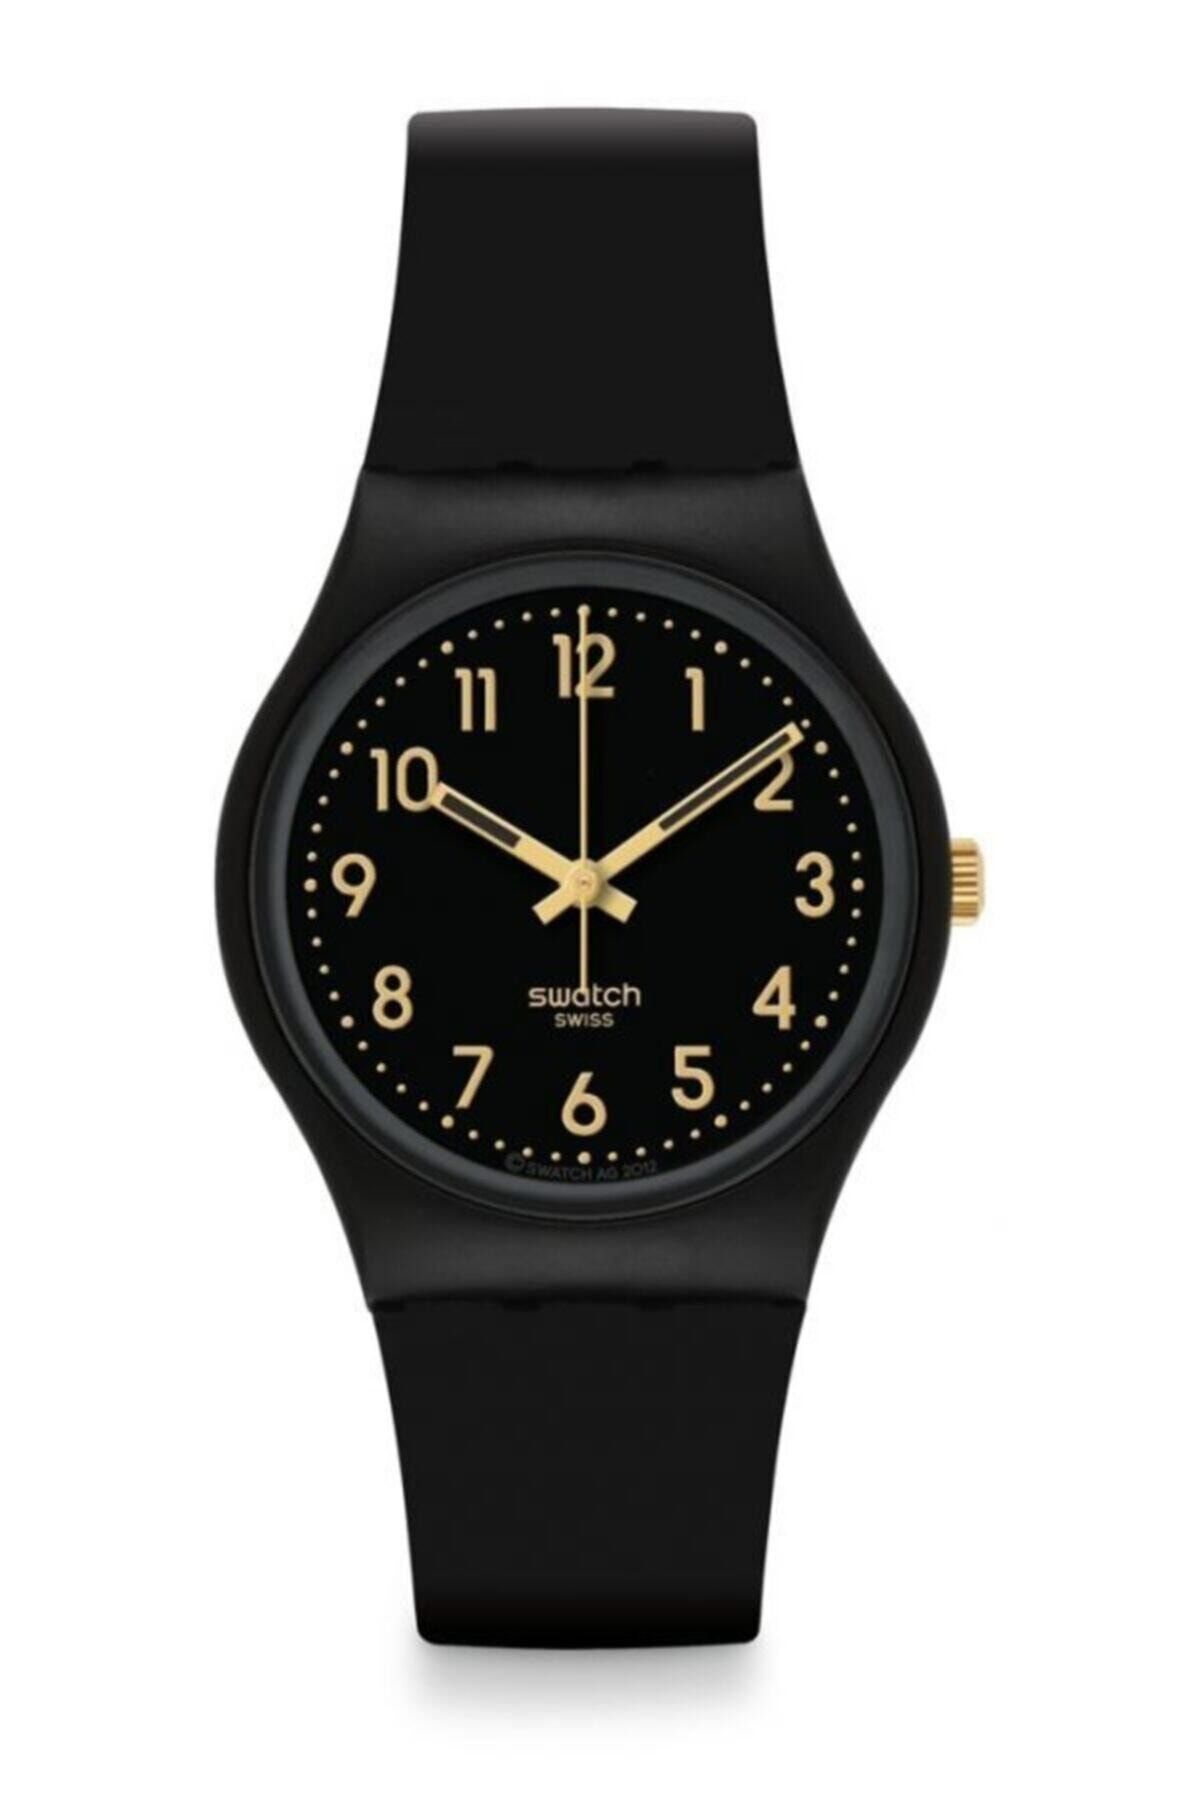 Часы свотч спб. Swatch lb170e. Swatch yes4005. Часы Swatch Swiss мужские. Часы Swatch gn254.